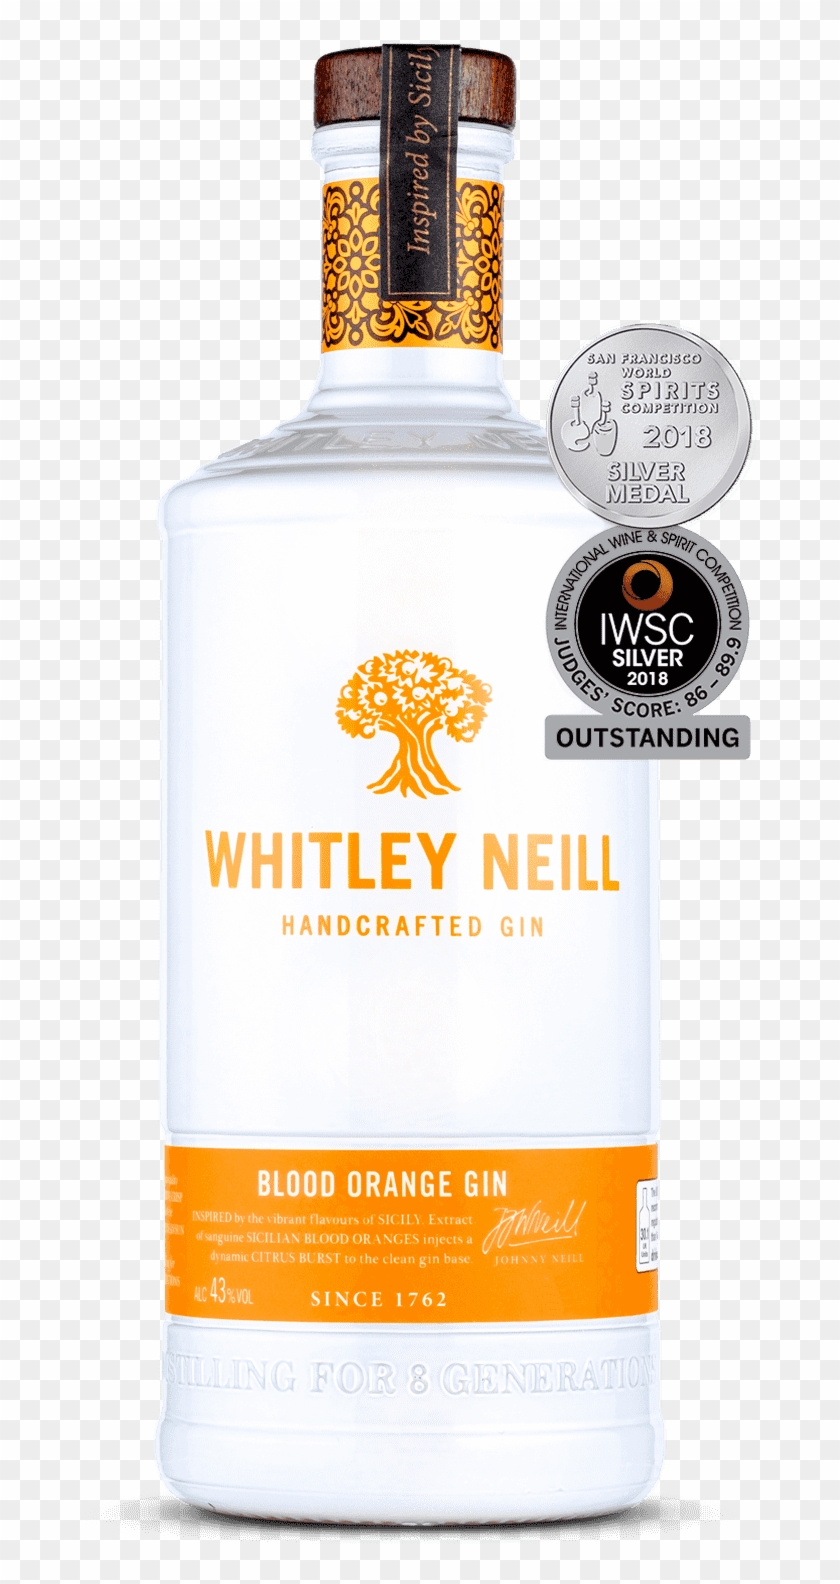 Blood Orange Gin - Whitley Neill Gin Clipart